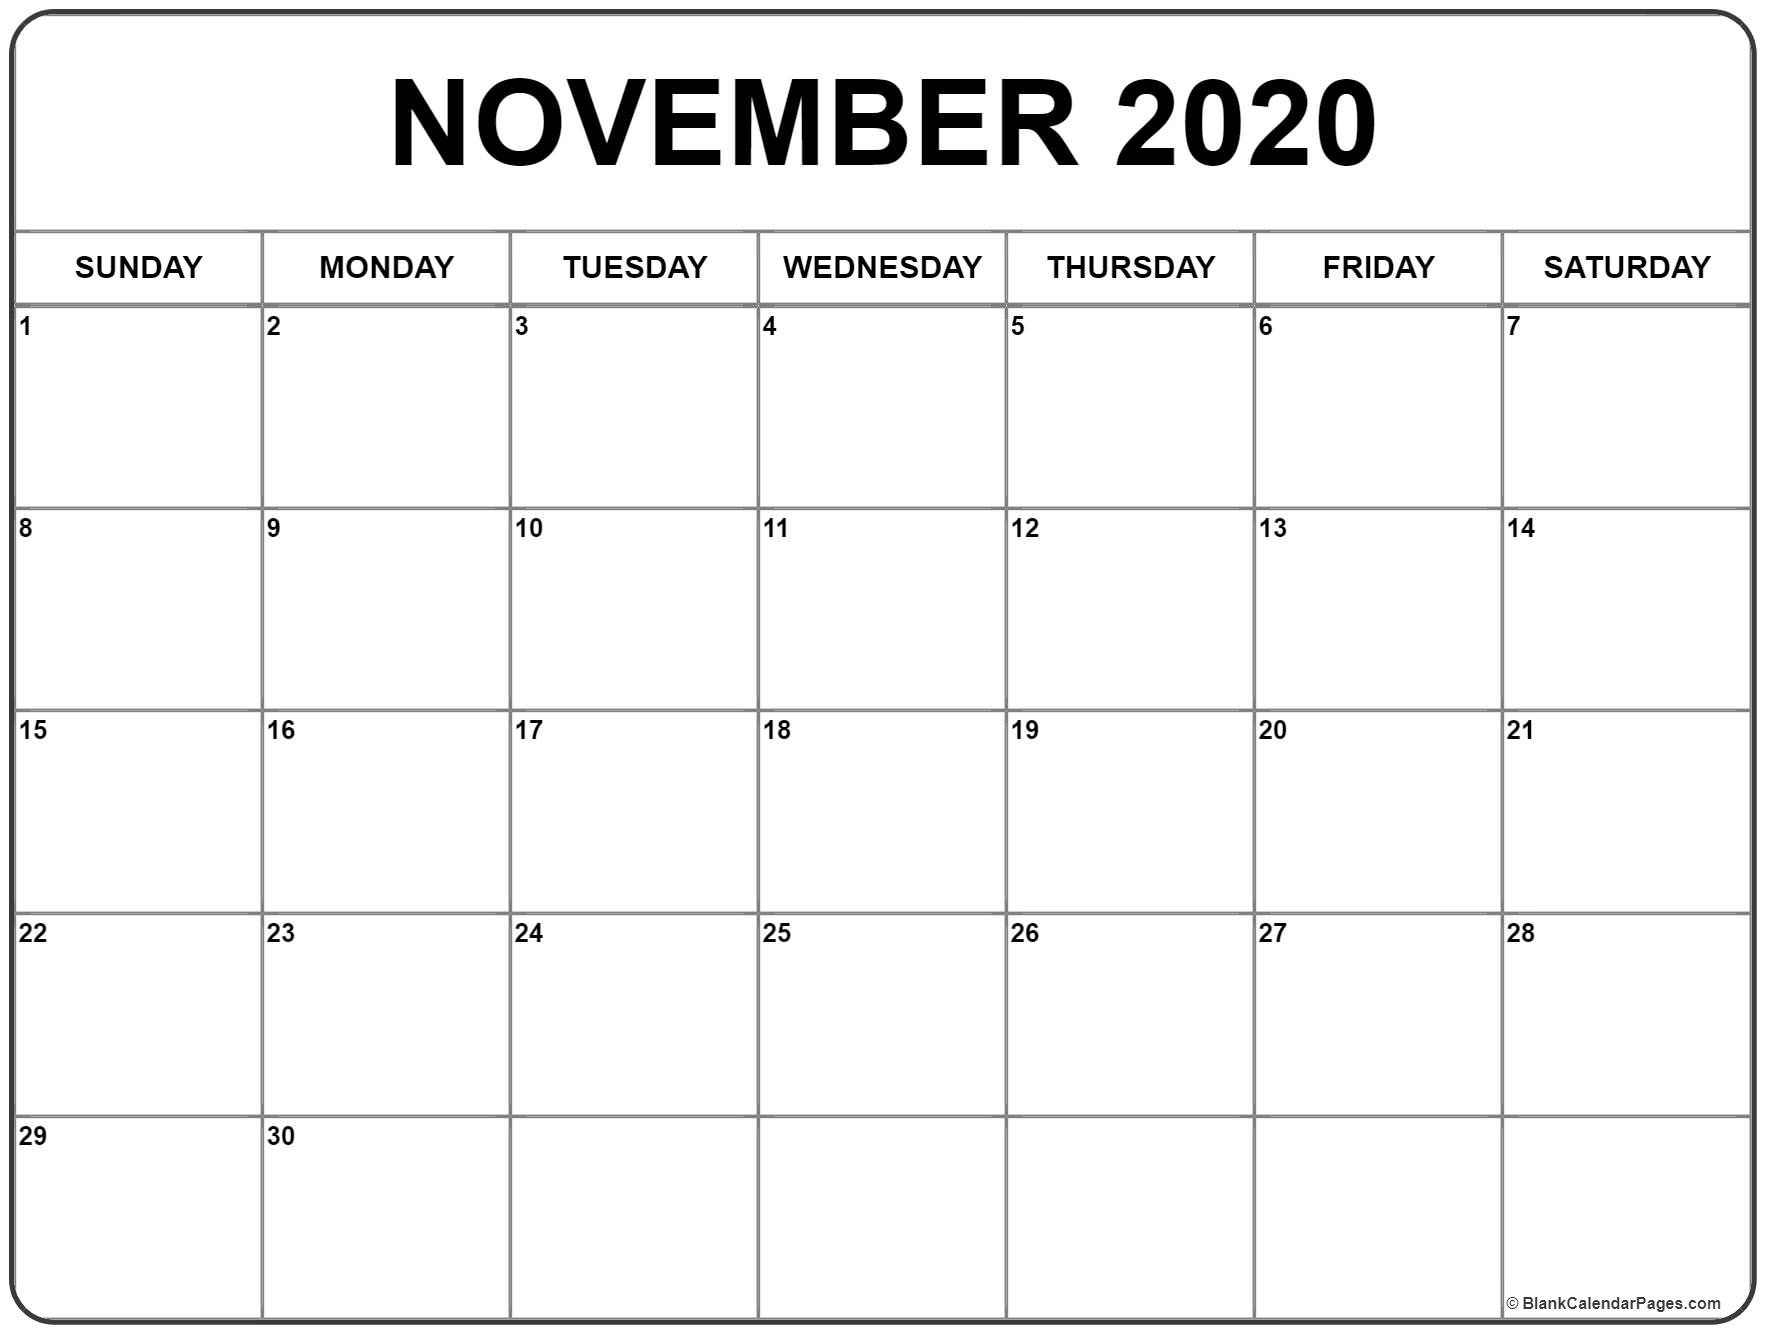 November 2020 calendar